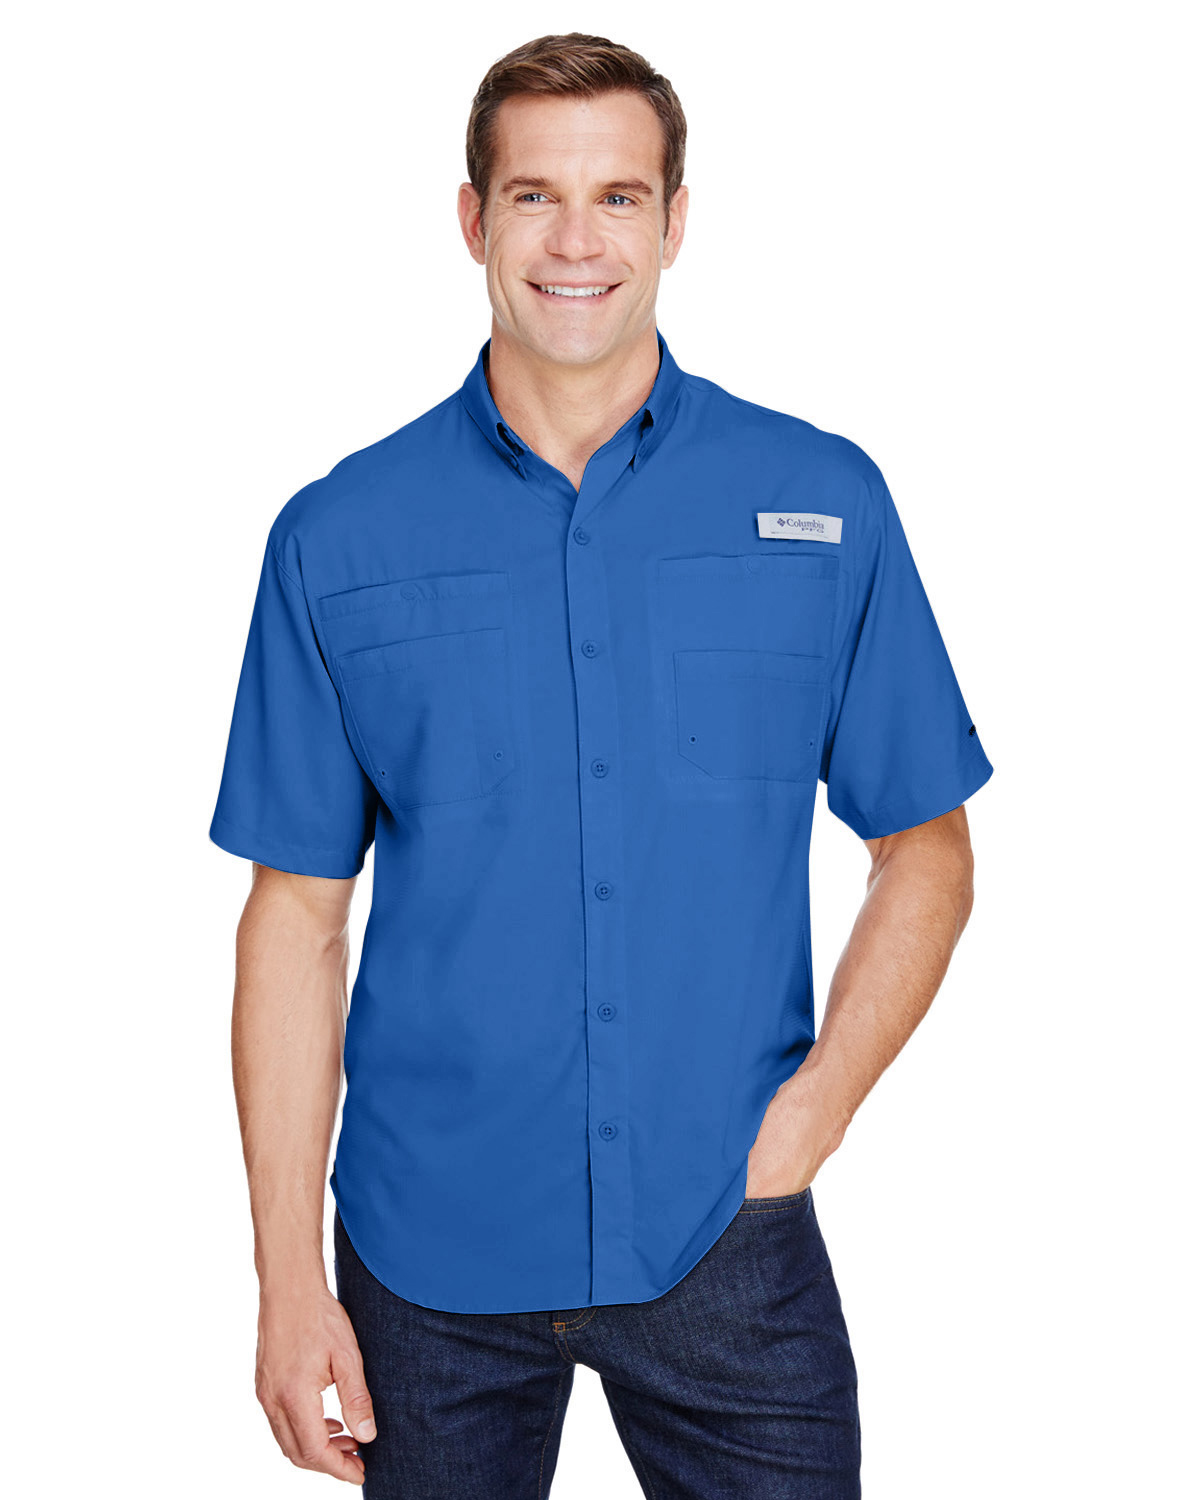 https://images.shirtspace.com/fullsize/z2H8AvhtTDpa7D2qvYXqhA%3D%3D/121419/5461-columbia-7266-men-s-tamiami-ii-short-sleeve-shirt-front-vivid-blue.jpg